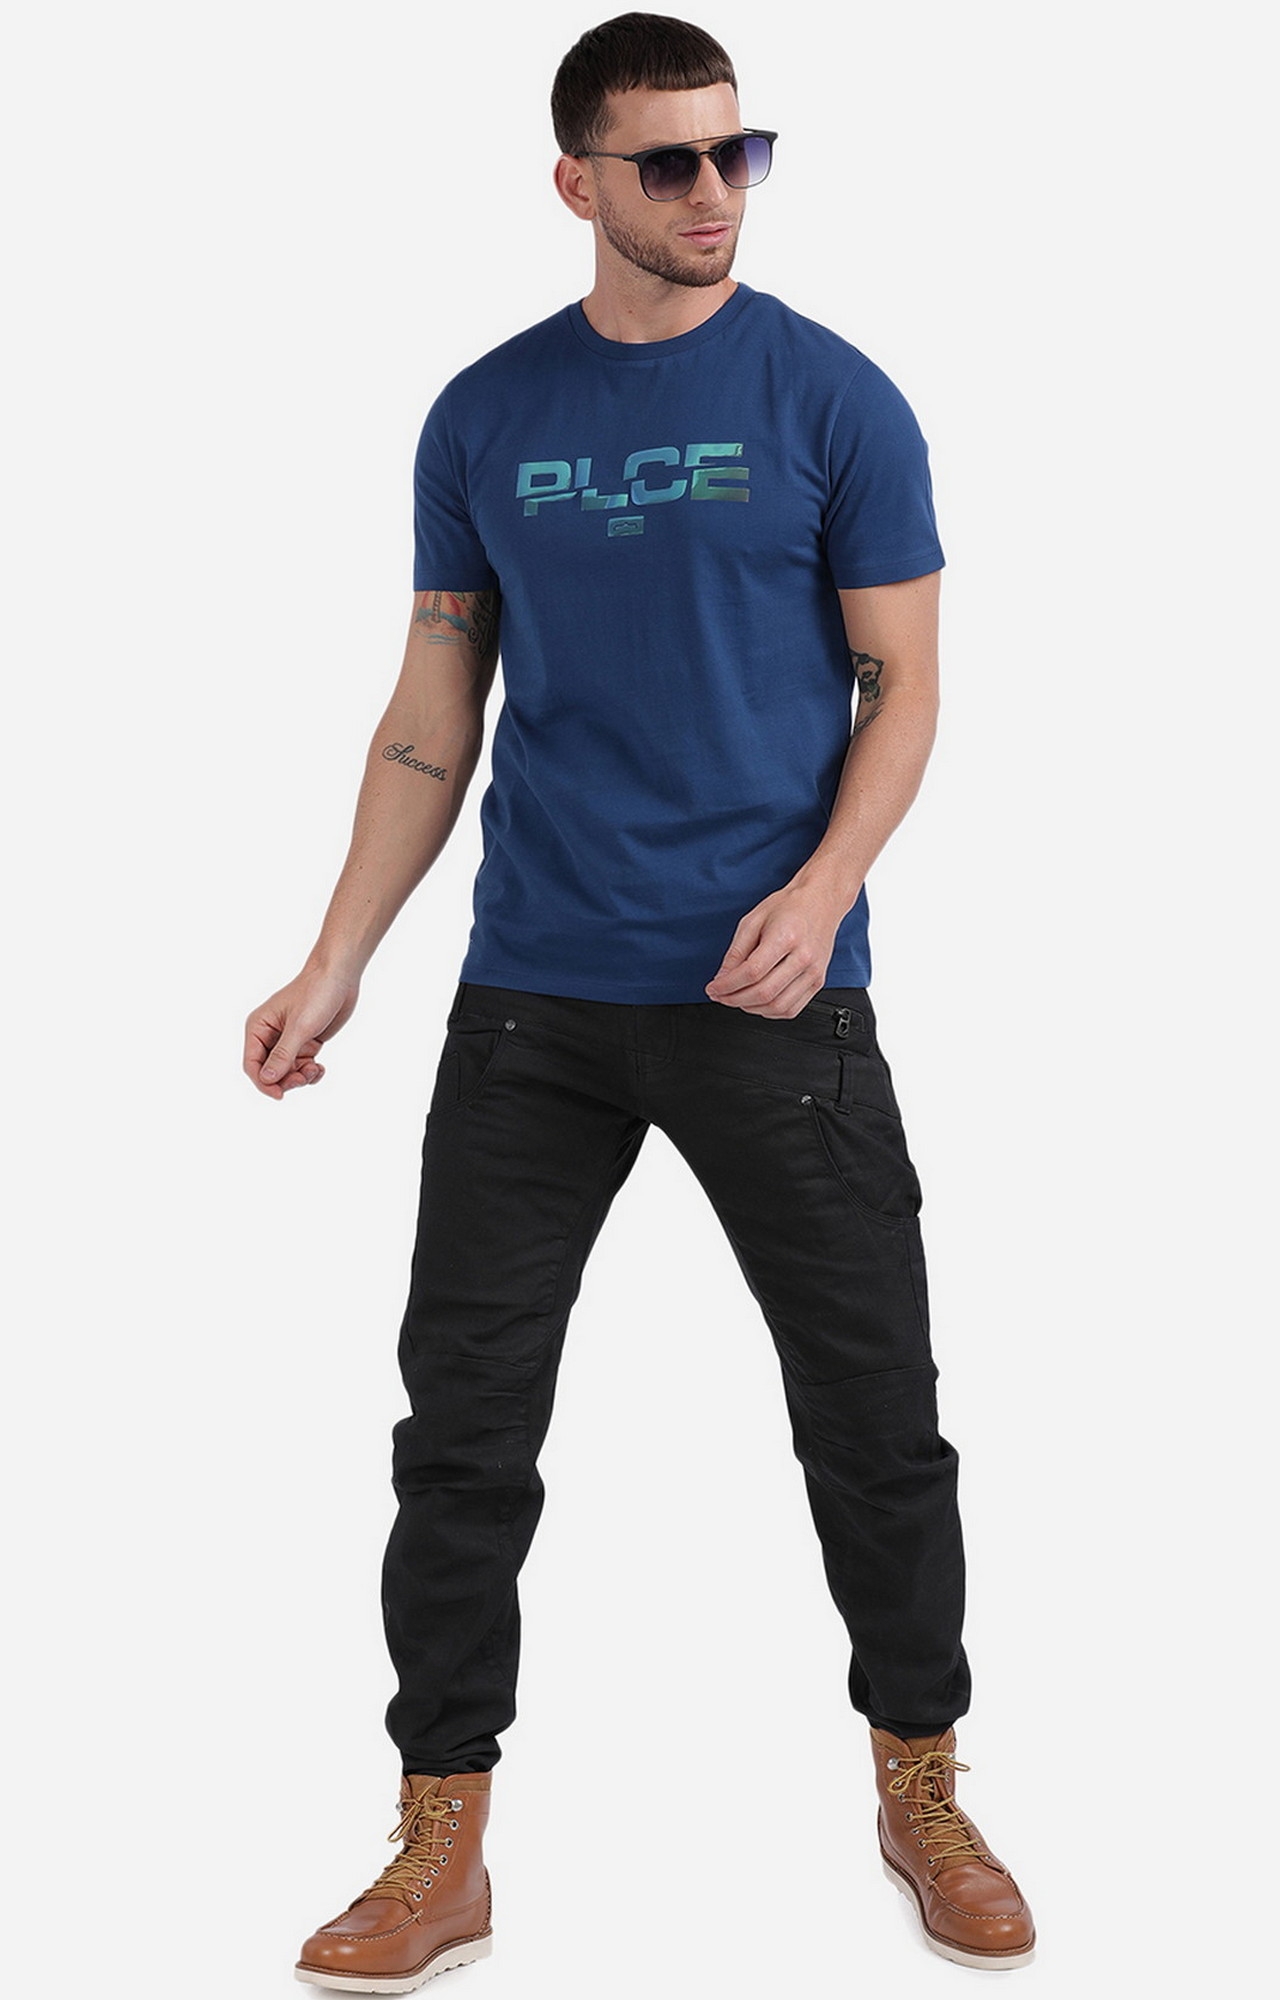 883 Police | Men's Navy Cotton Typographic Printed T-Shirt 6